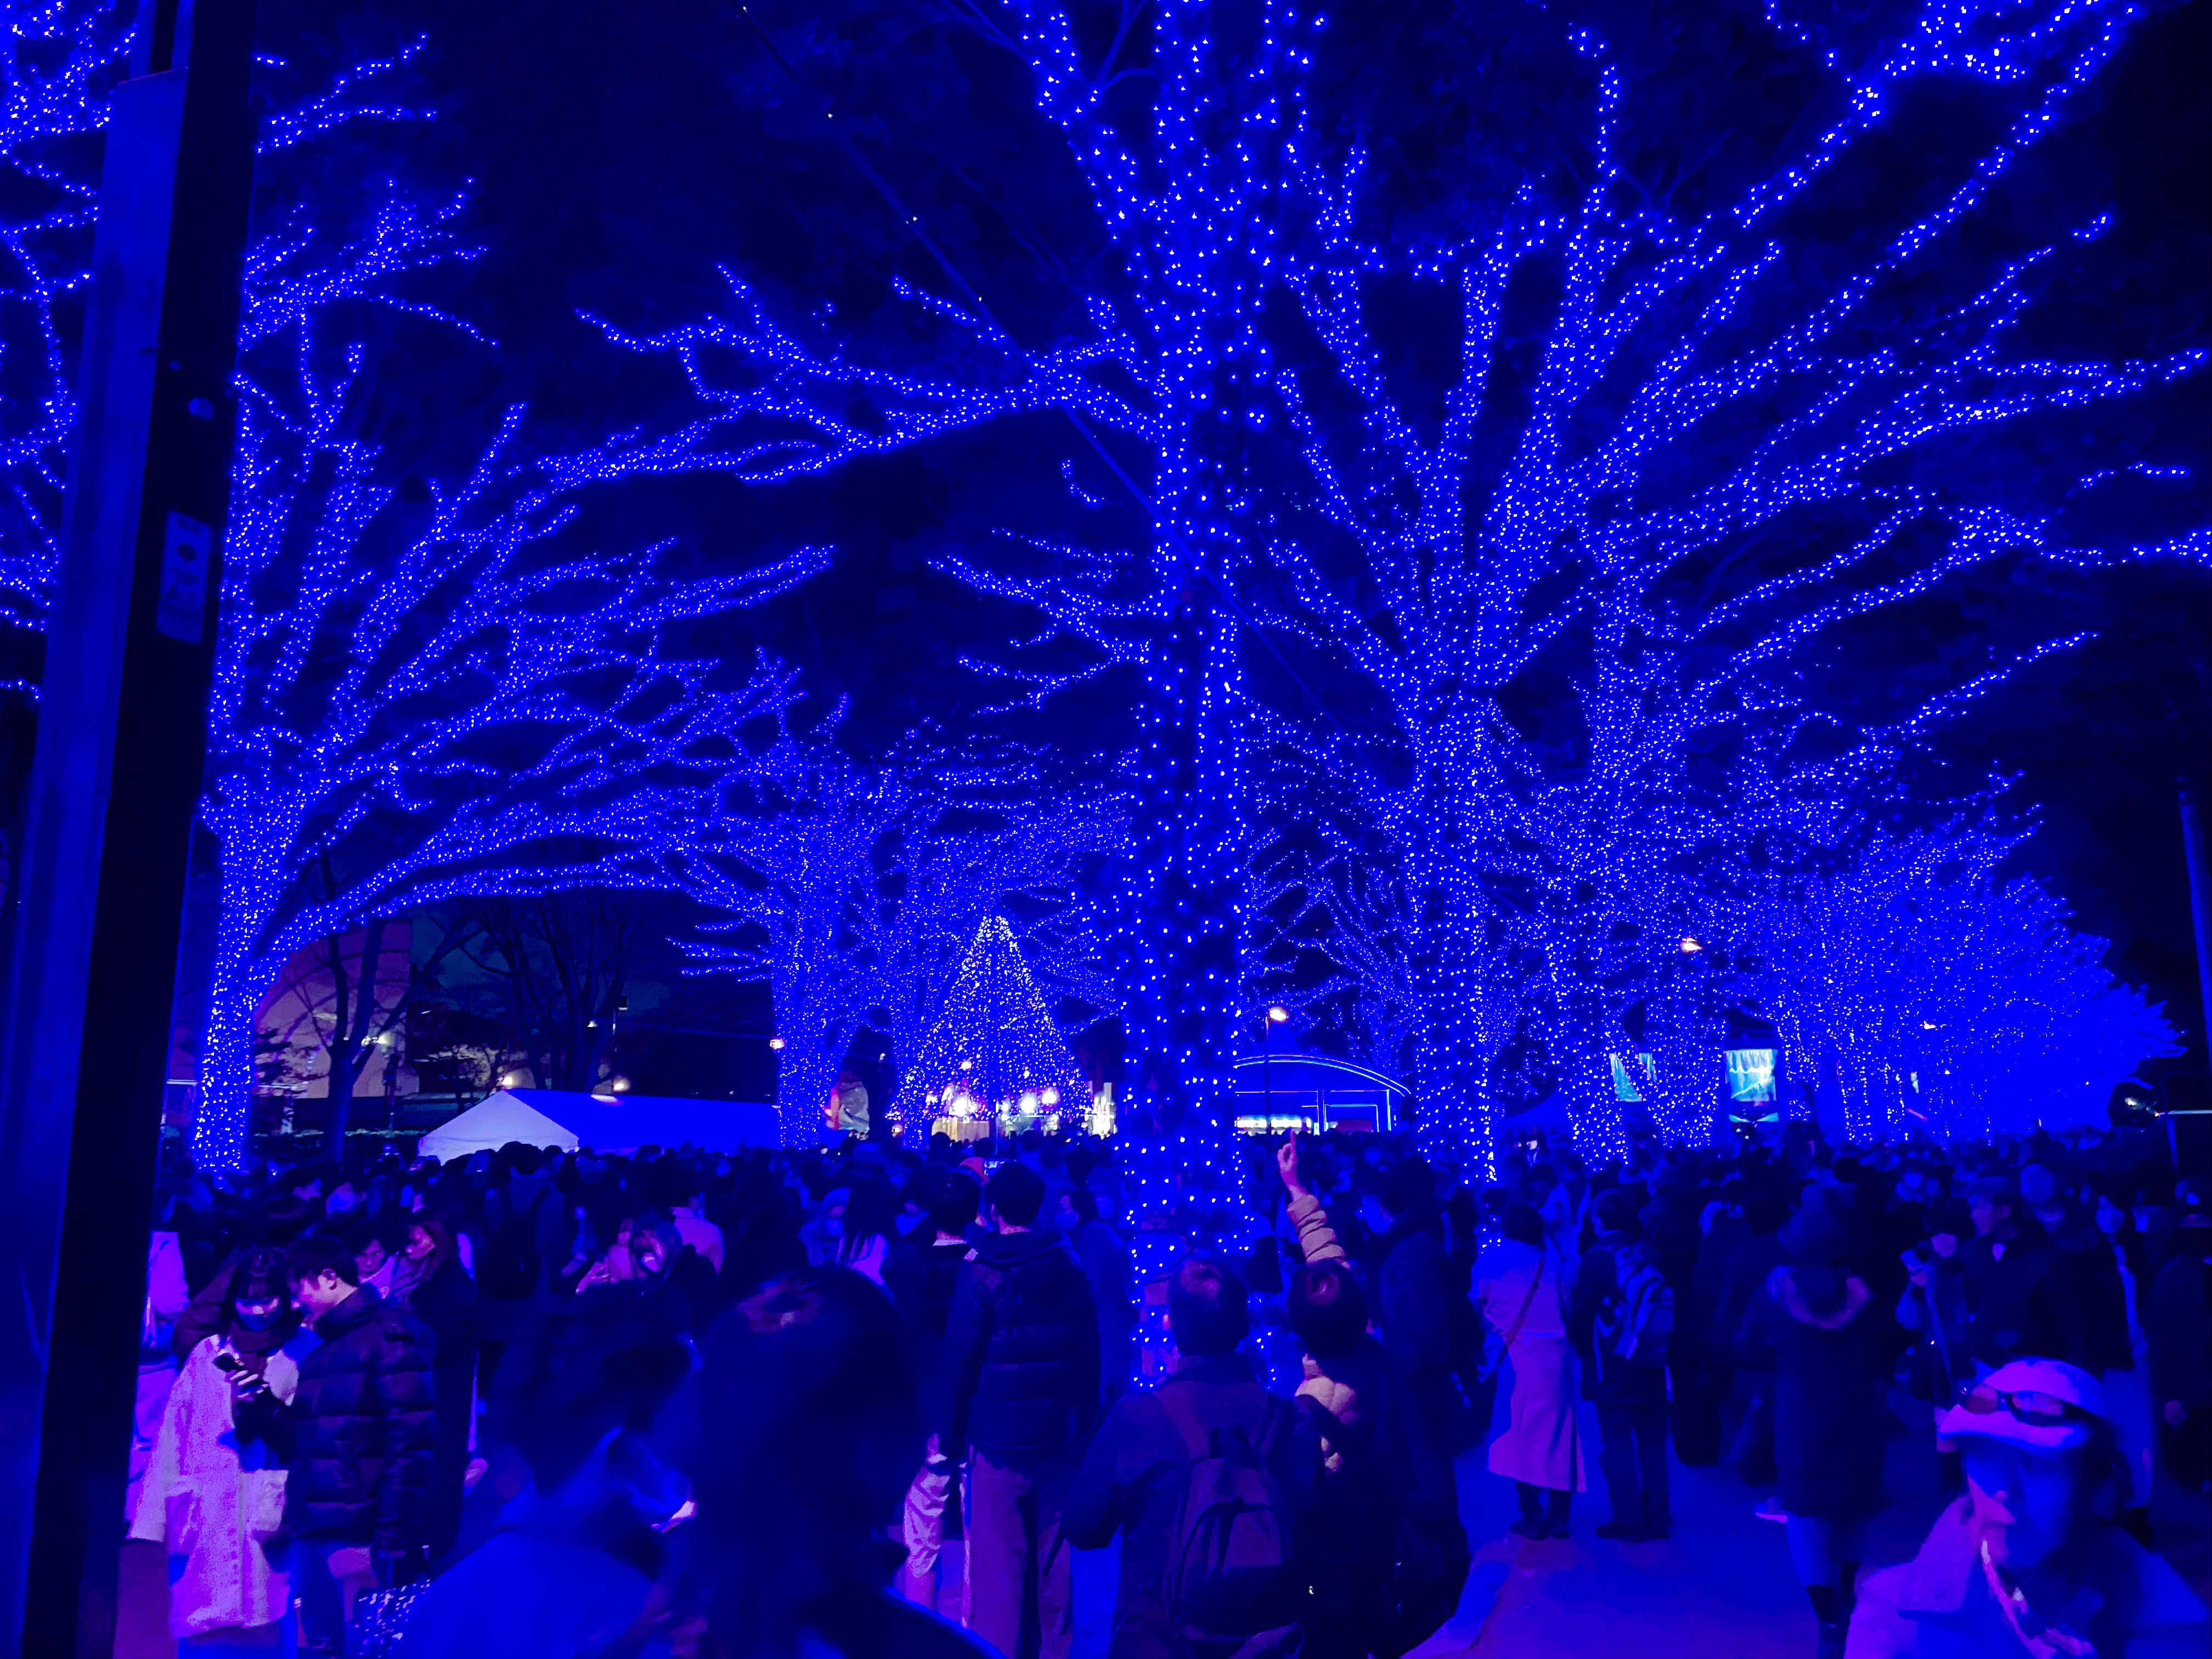 Zelkova trees lit up in blue